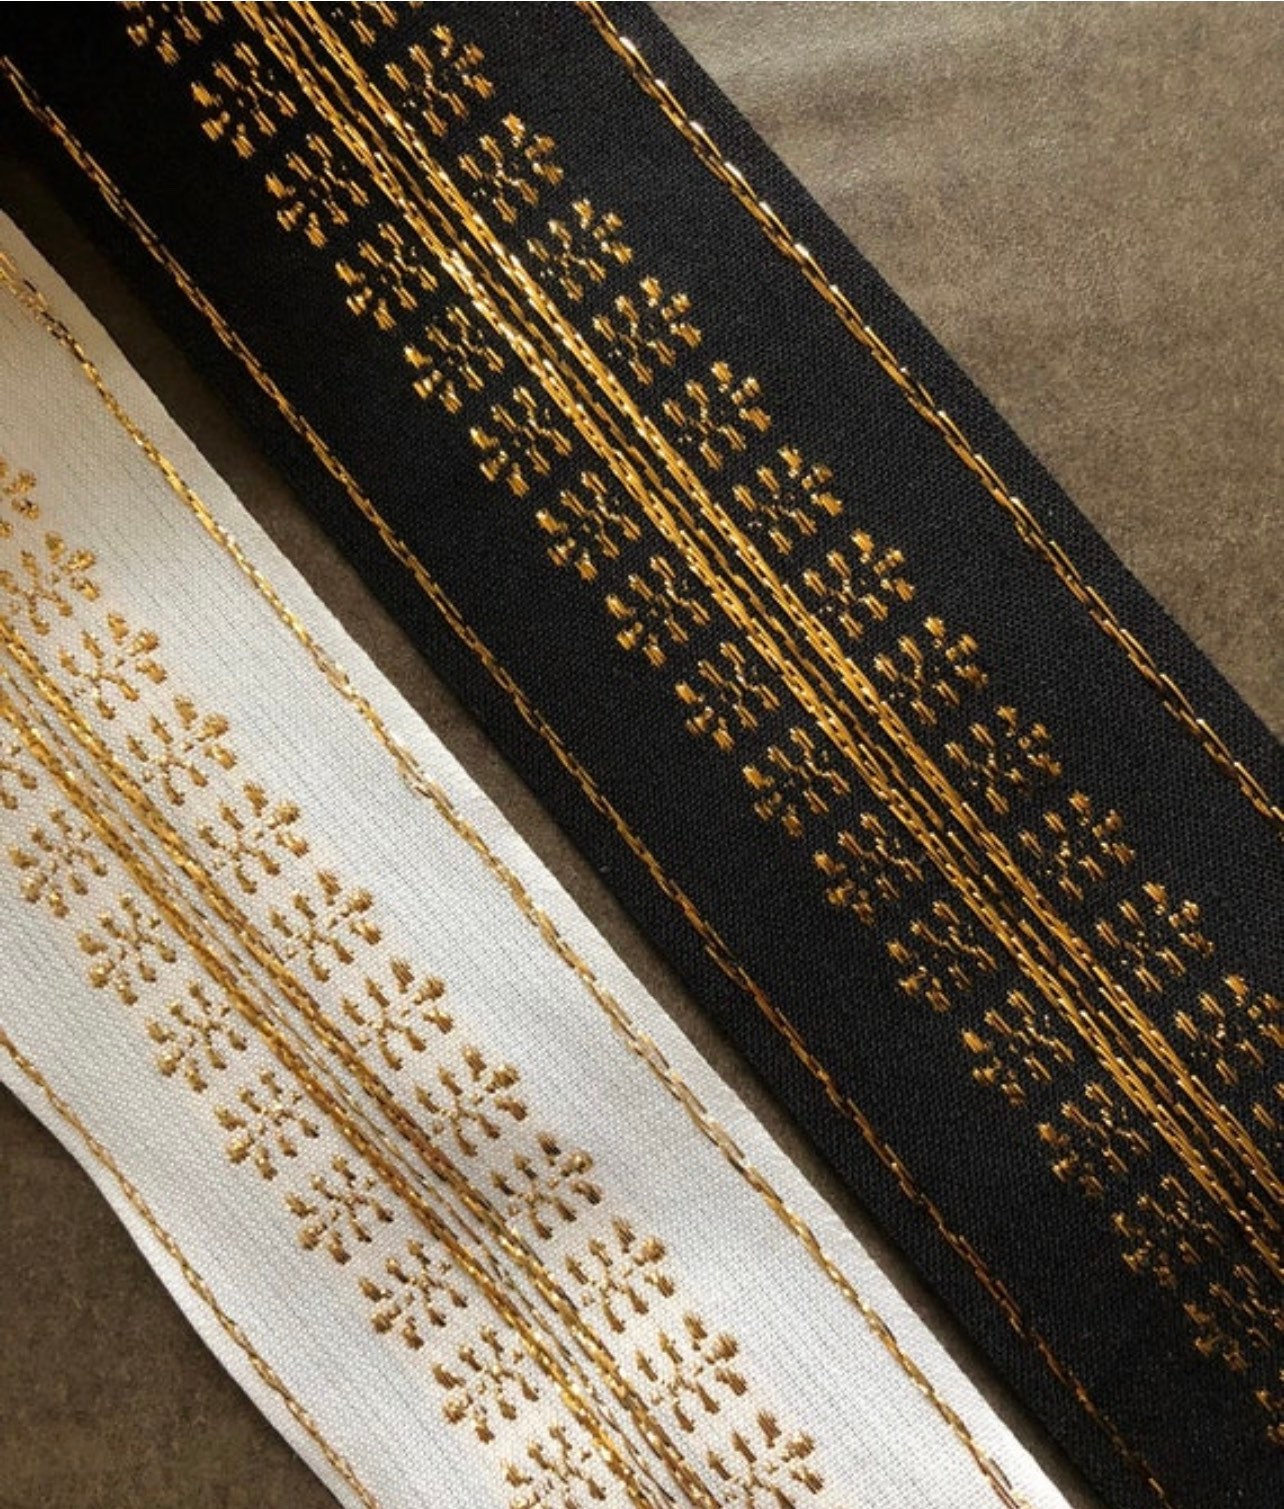 $1.50 yard black organza embroidered metallic gold sewing trim 2.75" wide w18 g 